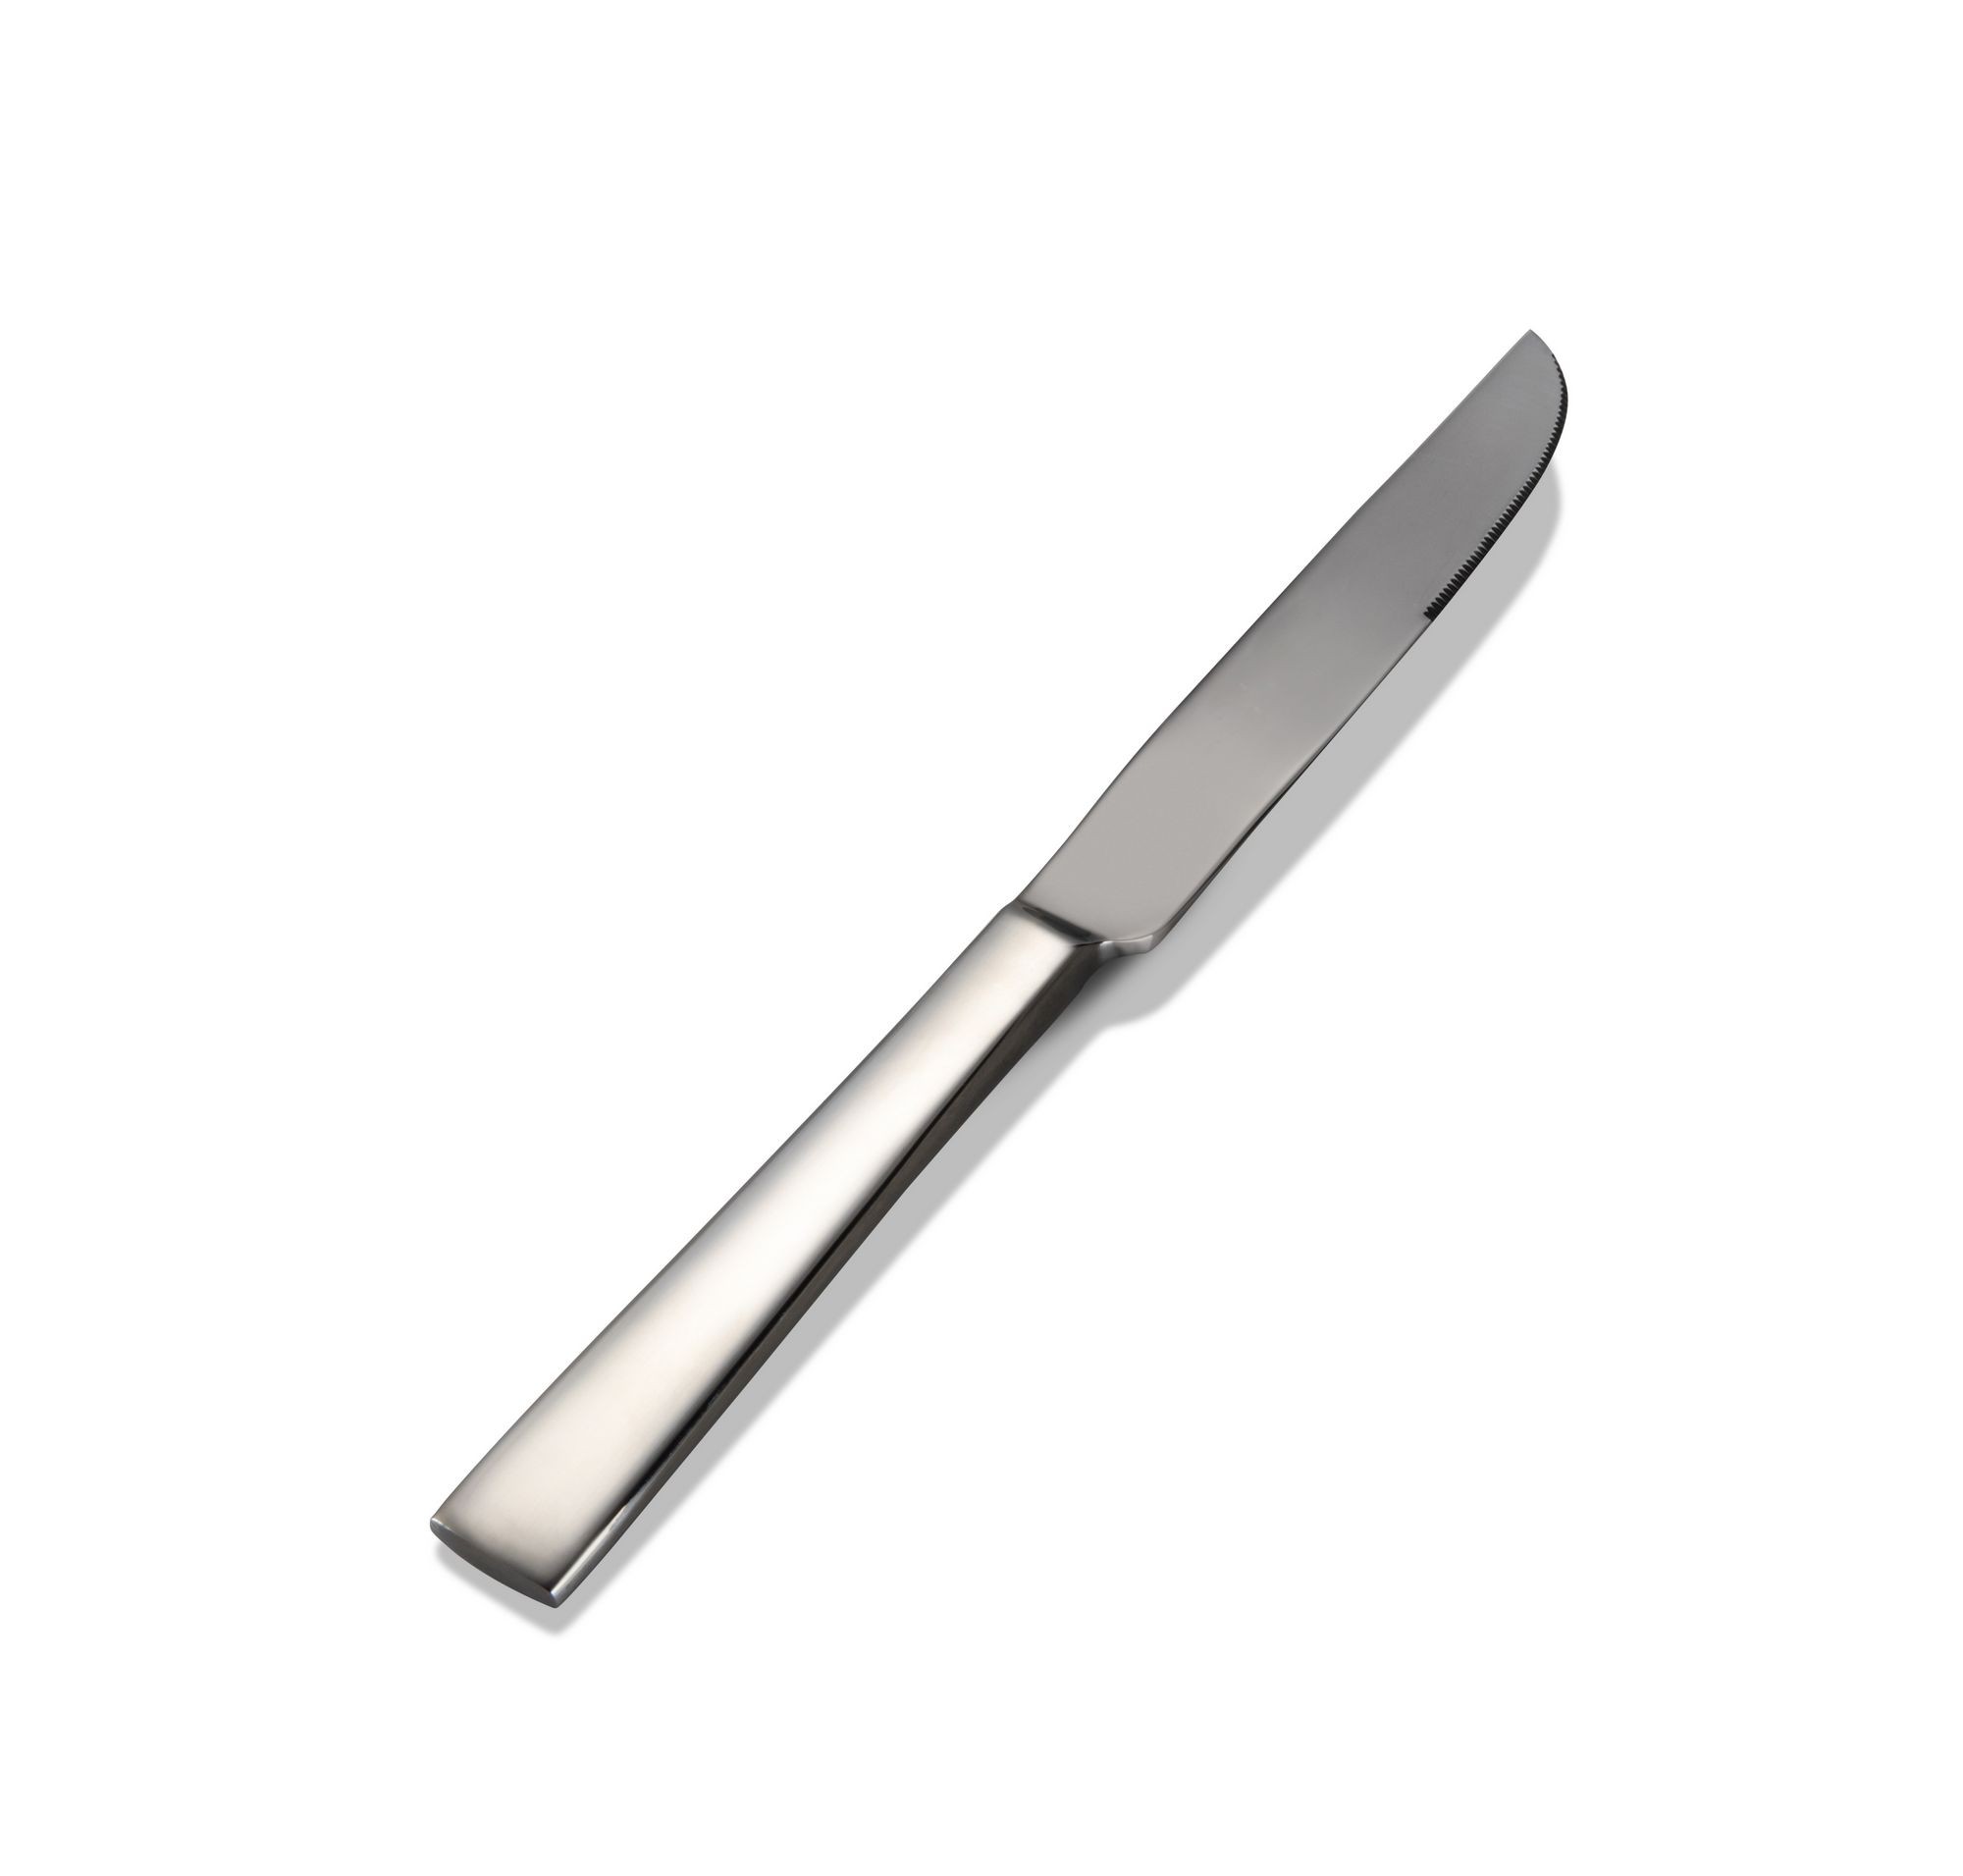 Bon Chef S3712 Roman 18/8 Stainless Steel European Solid Handle Dinner Knife